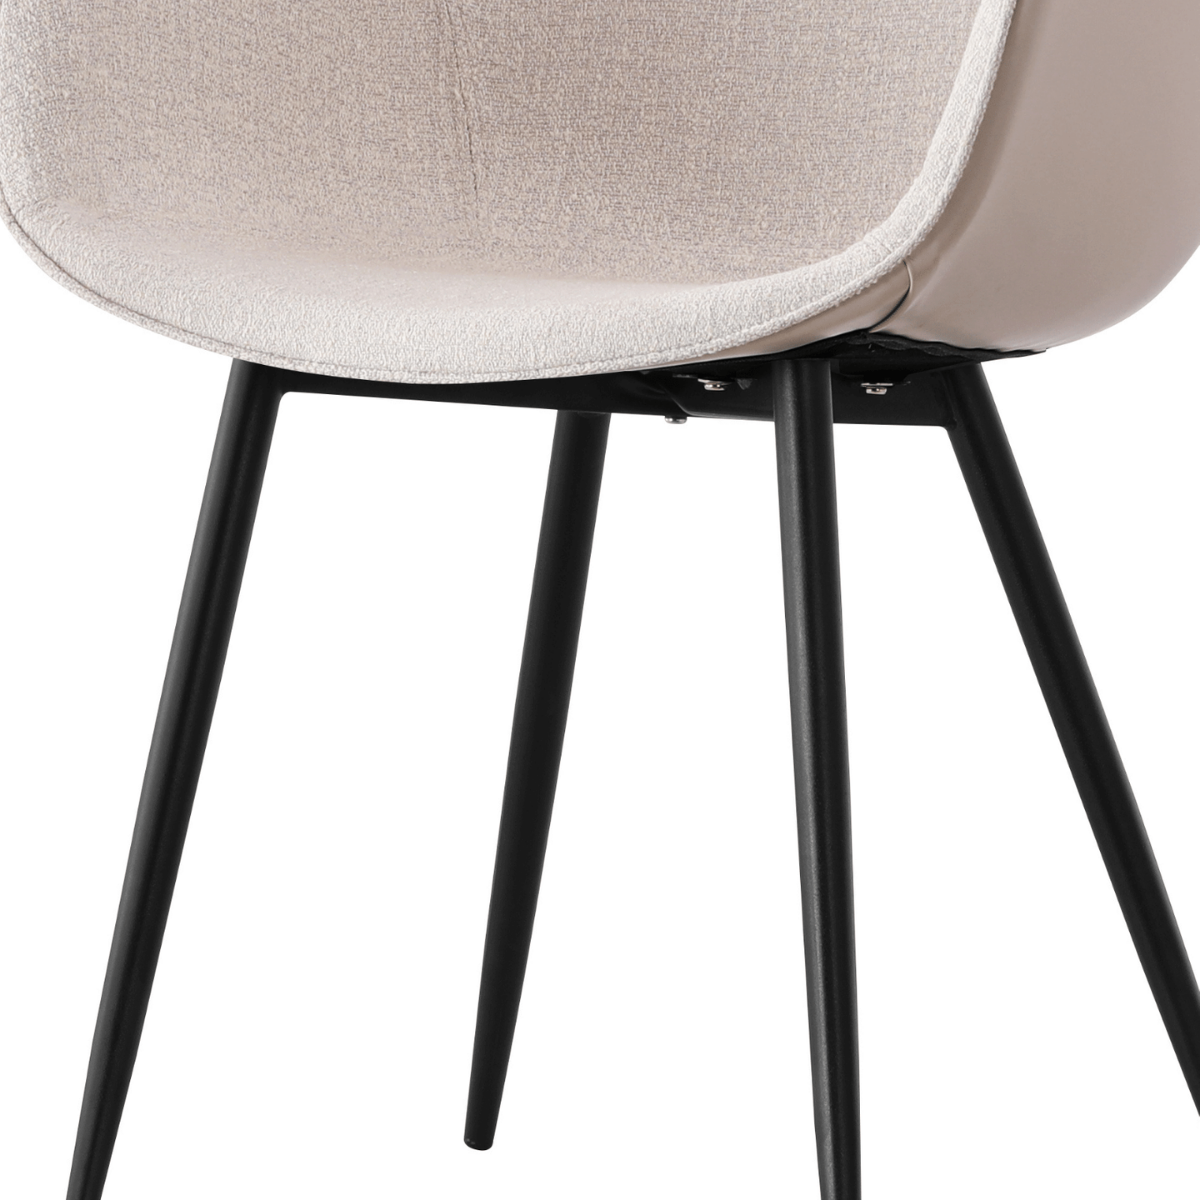 Dining PU Fabric Dining Chair Set of 2-Light grey